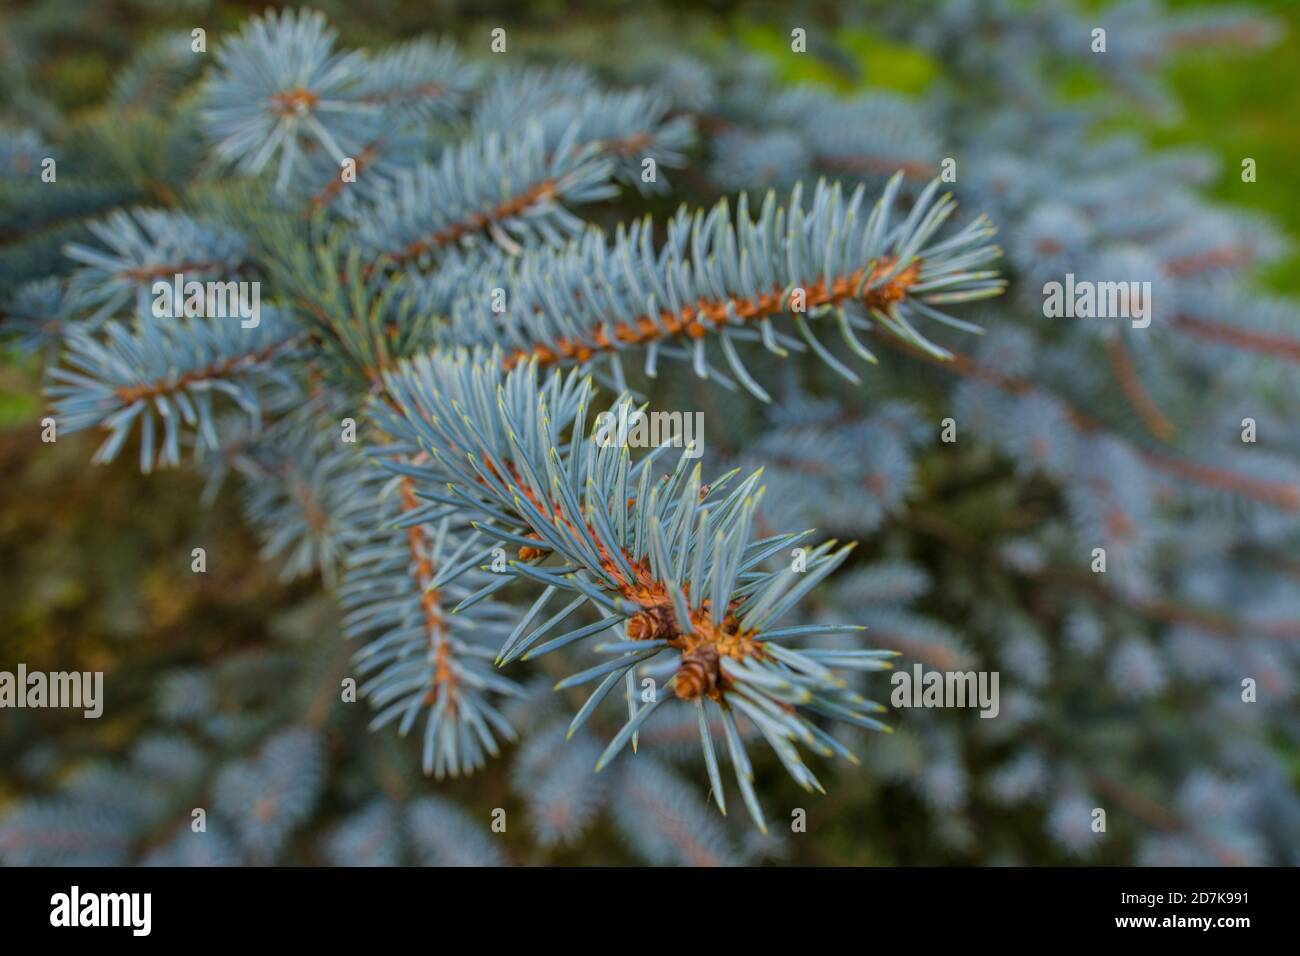 A branch of blue fir tree close-up. Stock Photo